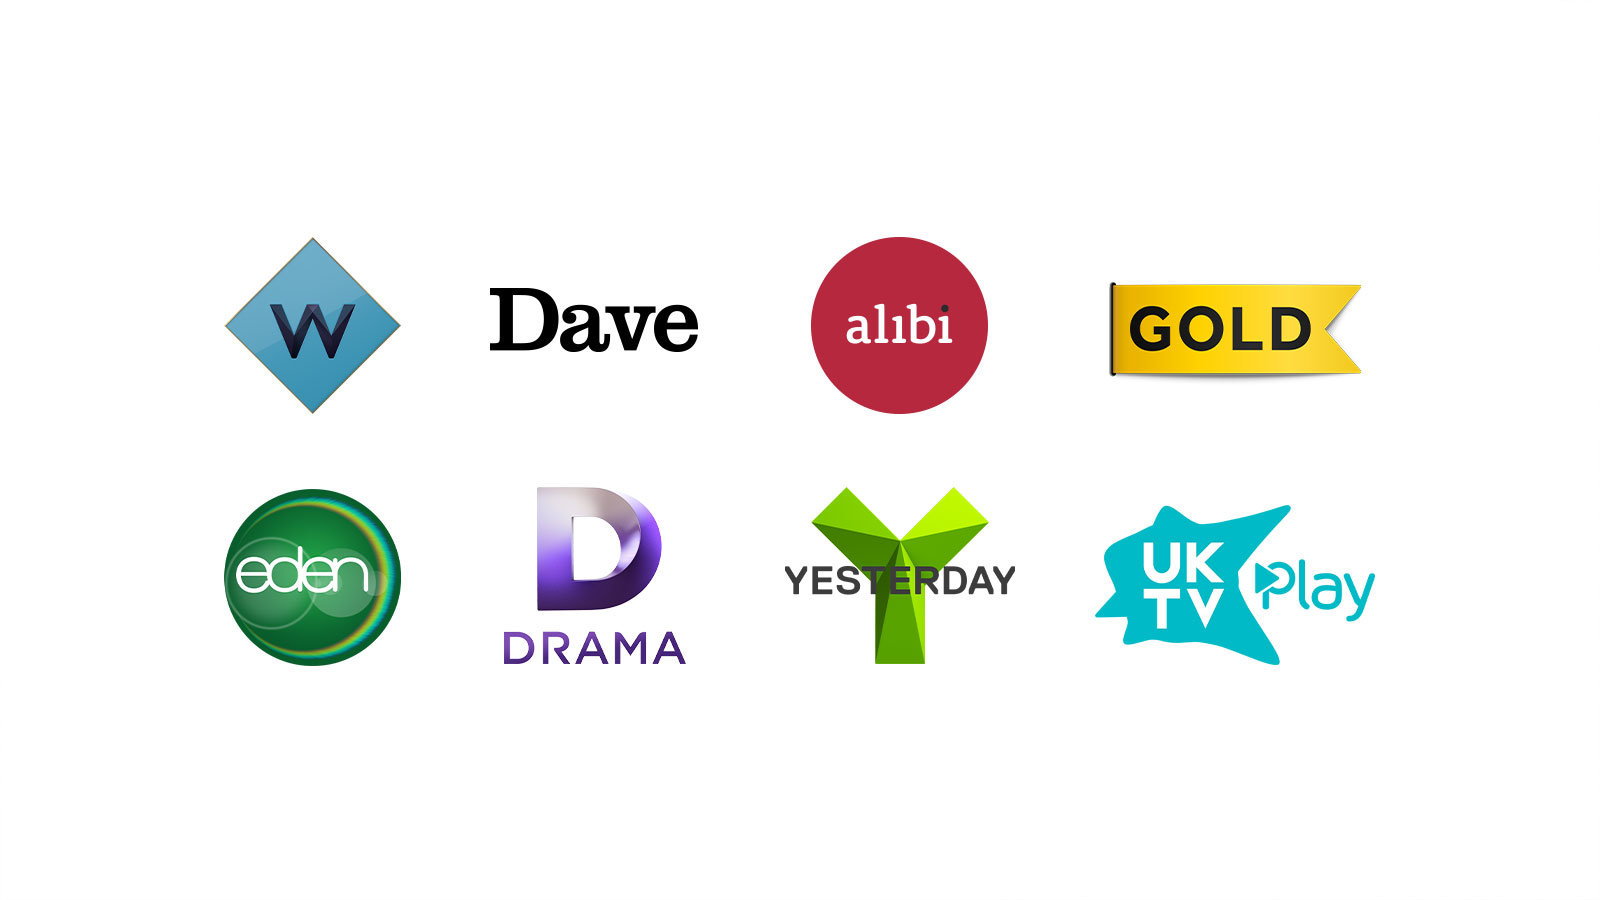 UKTV Partner channels